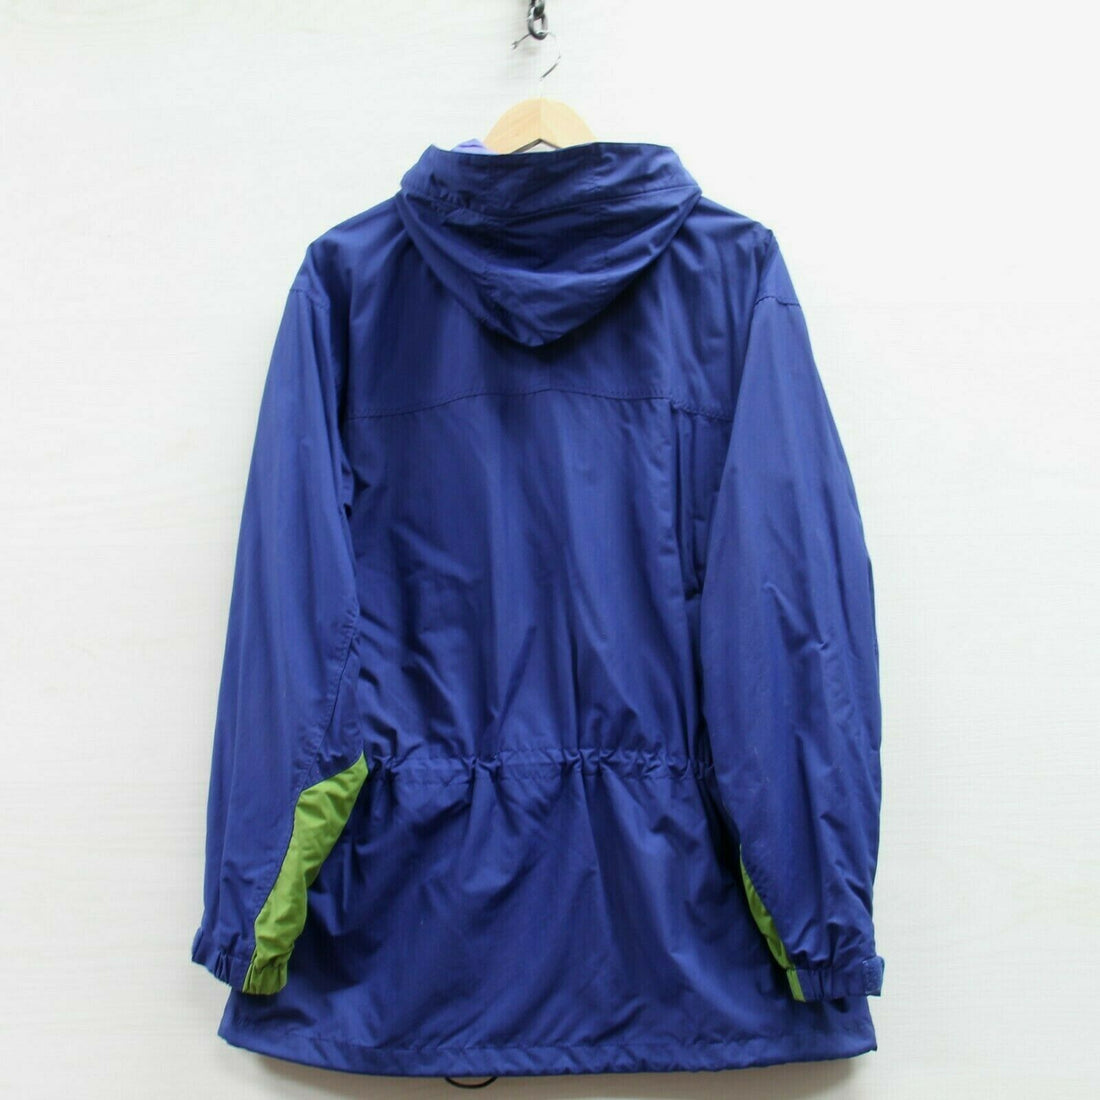 Vintage Patagonia Light Ski Jacket Size Medium Blue Cinched